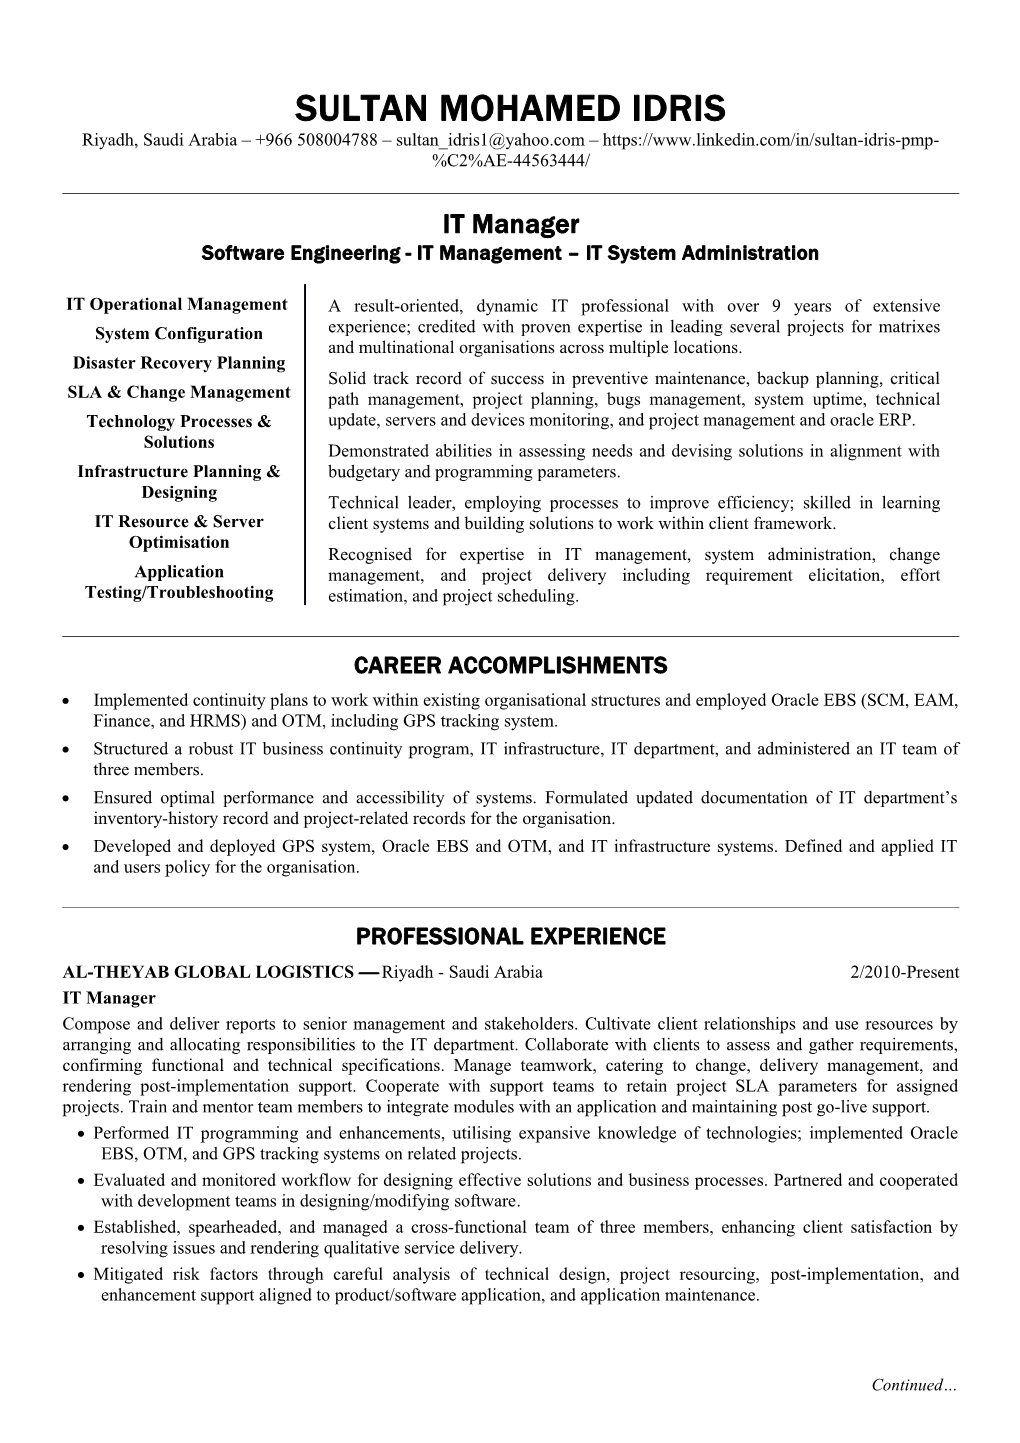 SULTAN IDRIS's Standard Resume